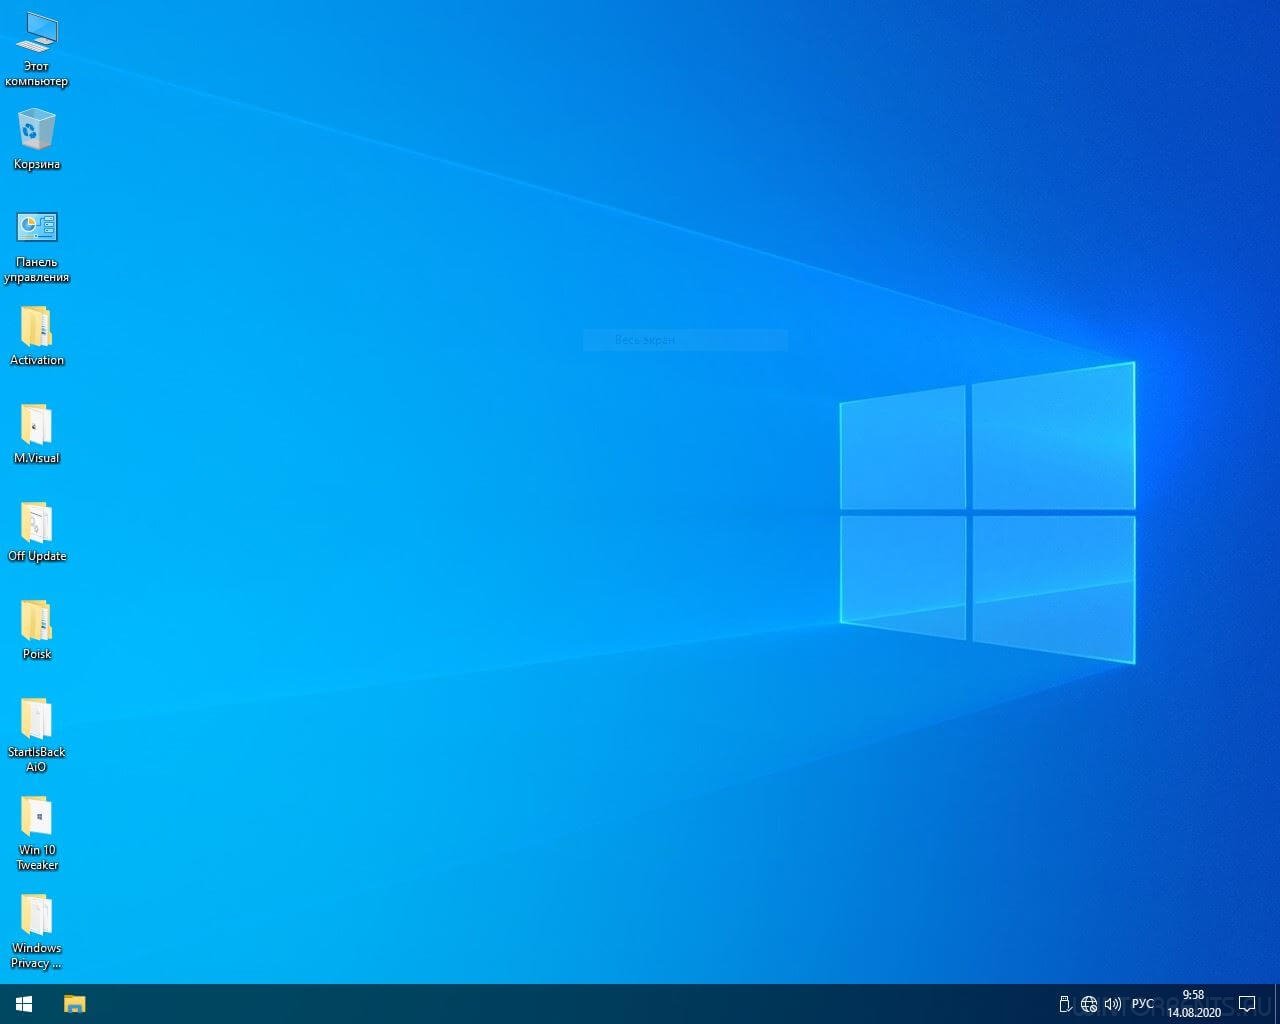 Windows 10 Enterprise (x64) Micro v.1909.18363.1016 by Zosma